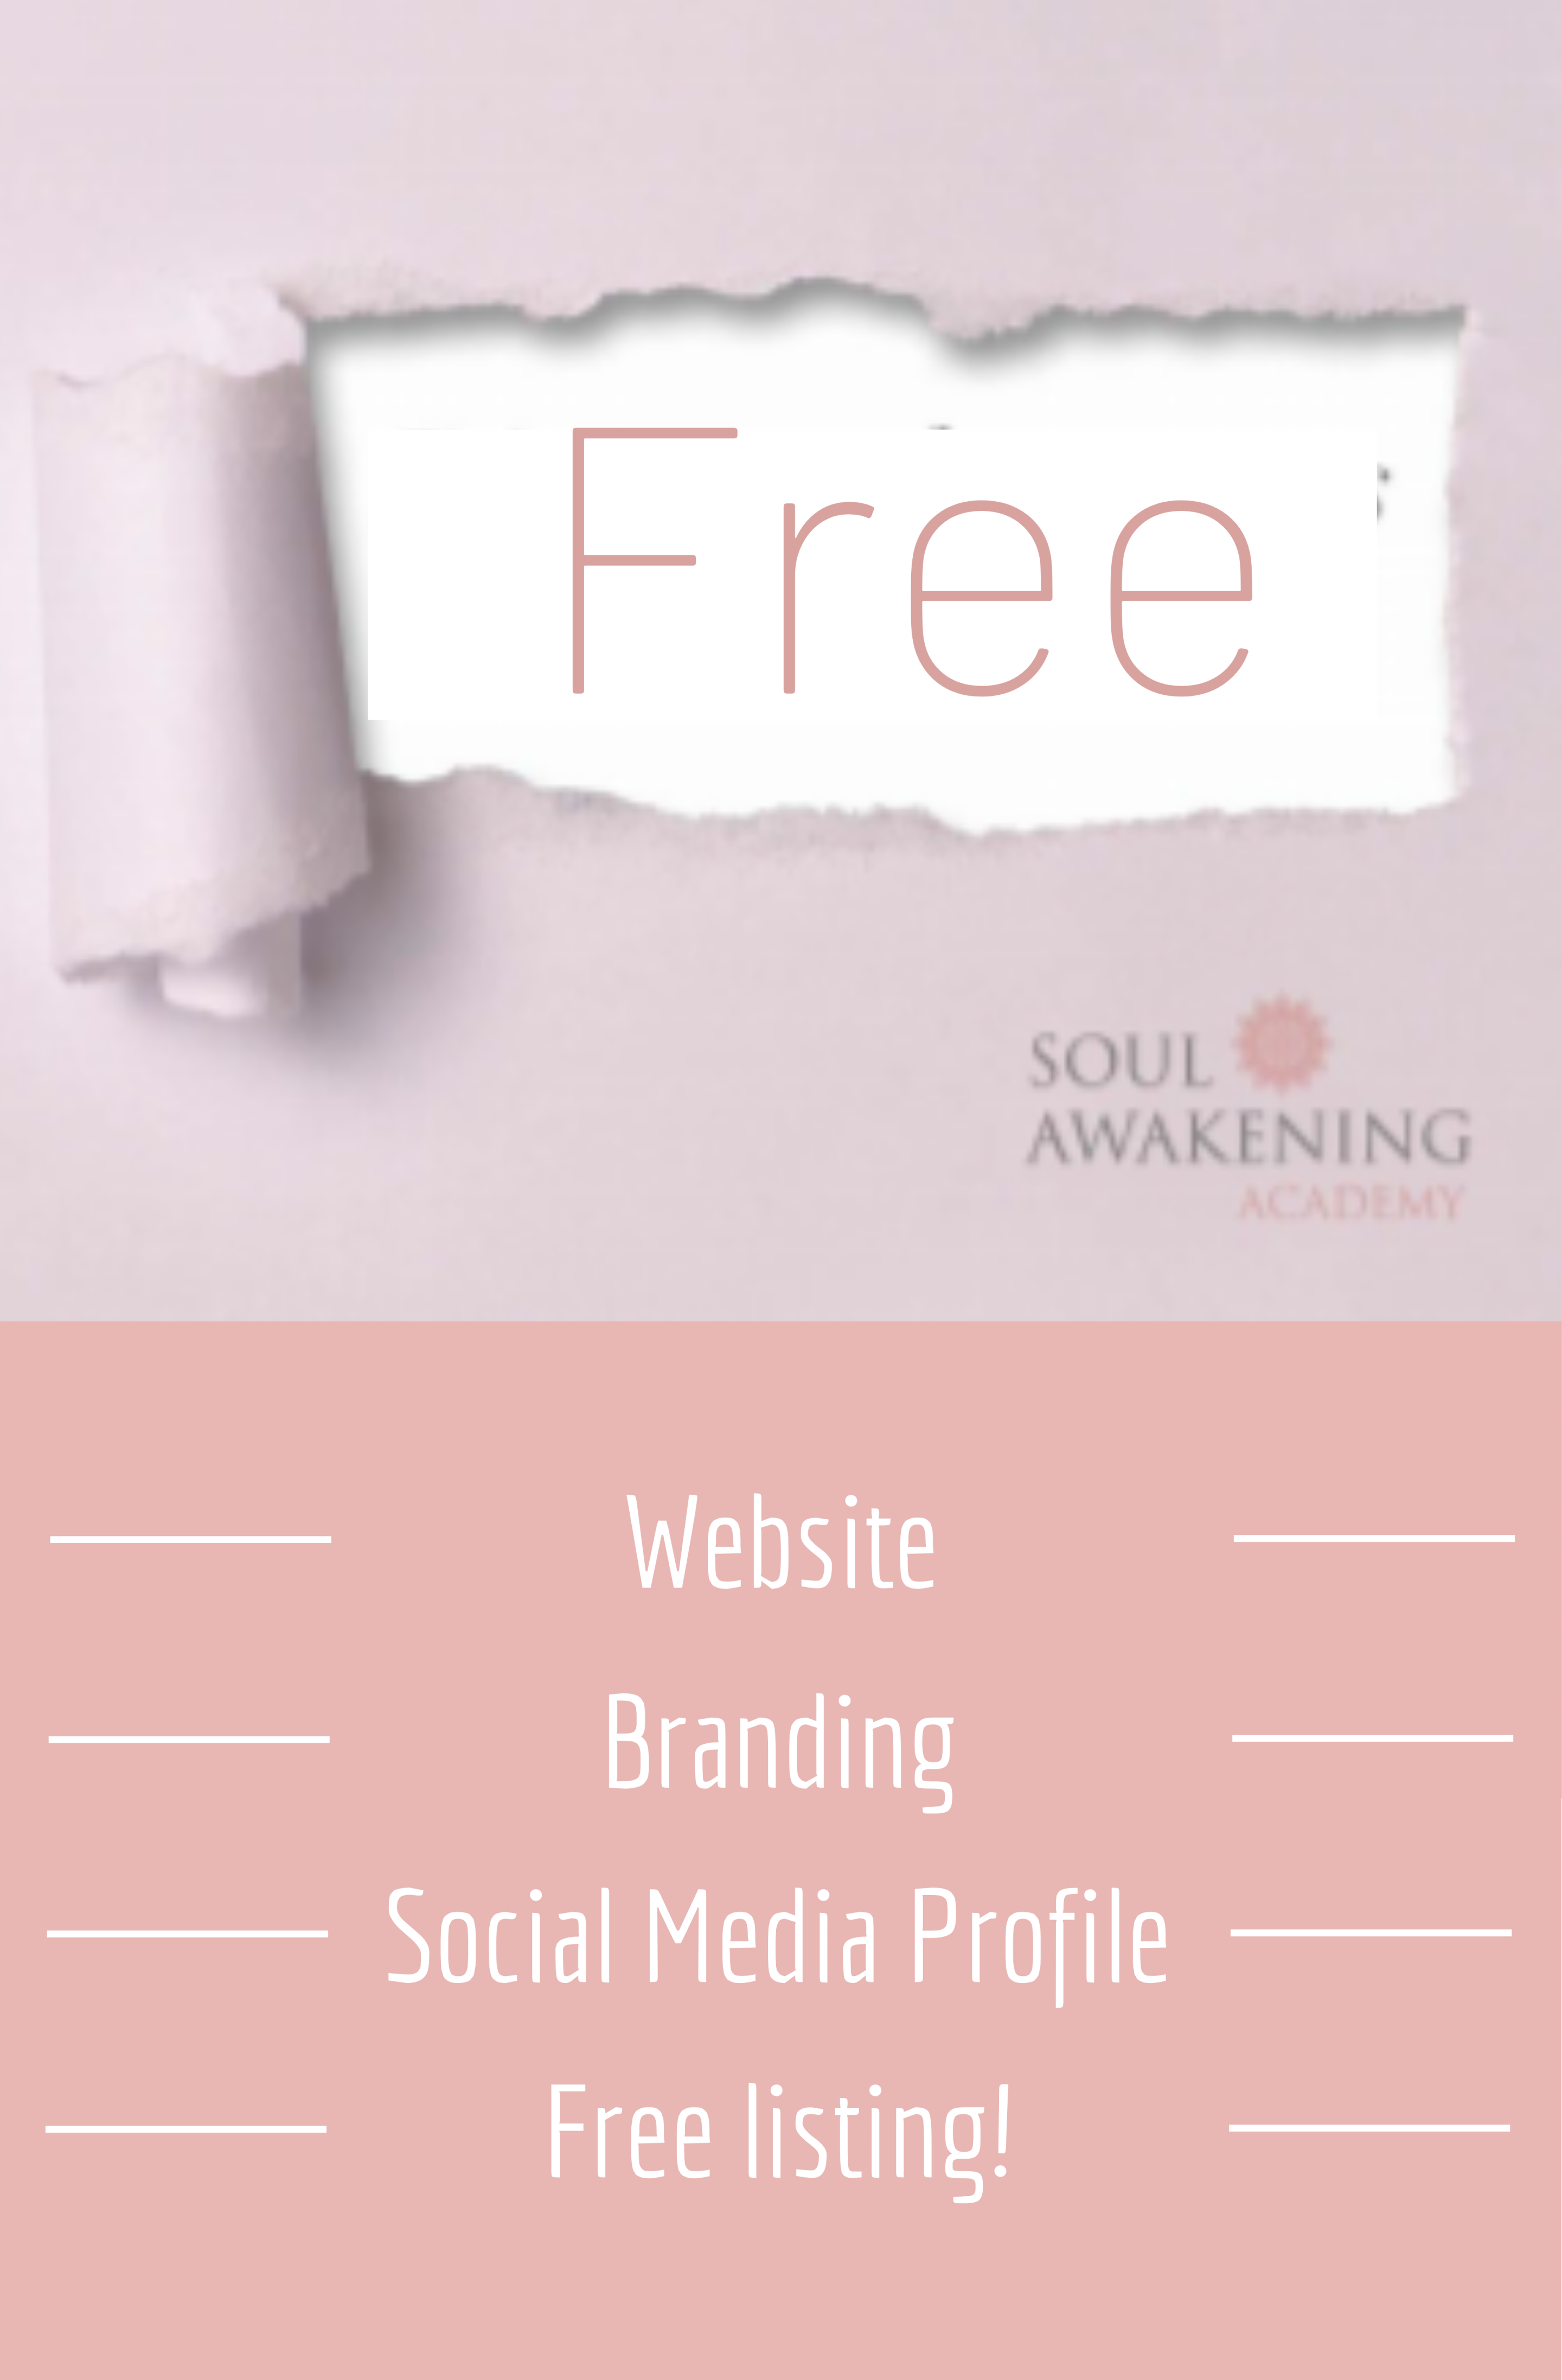 Free (1) | Soul Awakening Academy